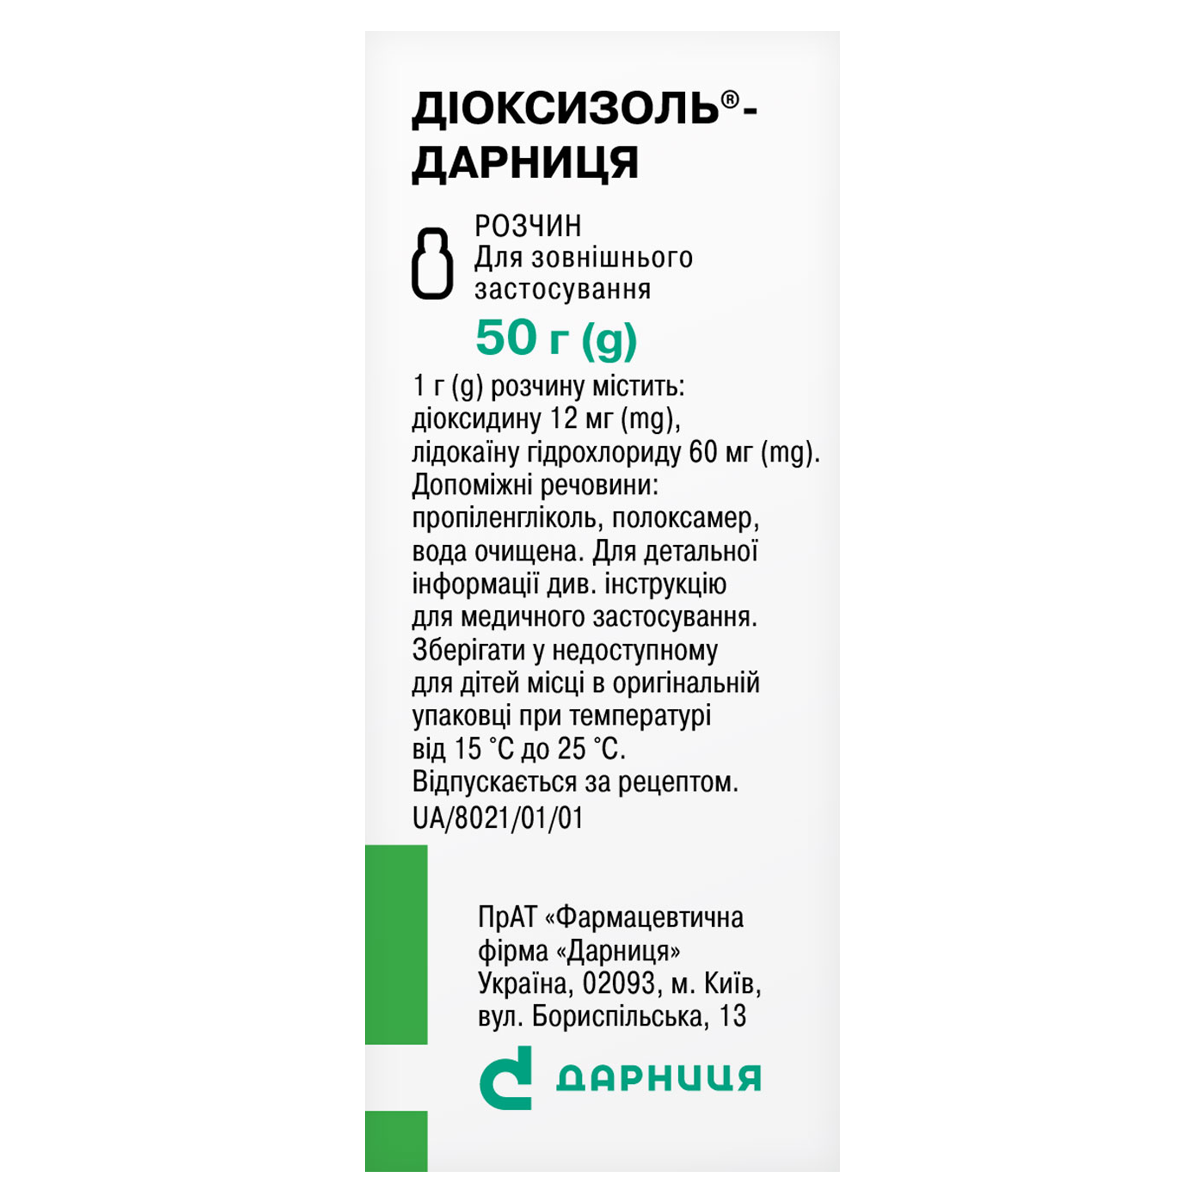 Діоксизоль-Дарниця фармацевтична компанія «Дарниця»